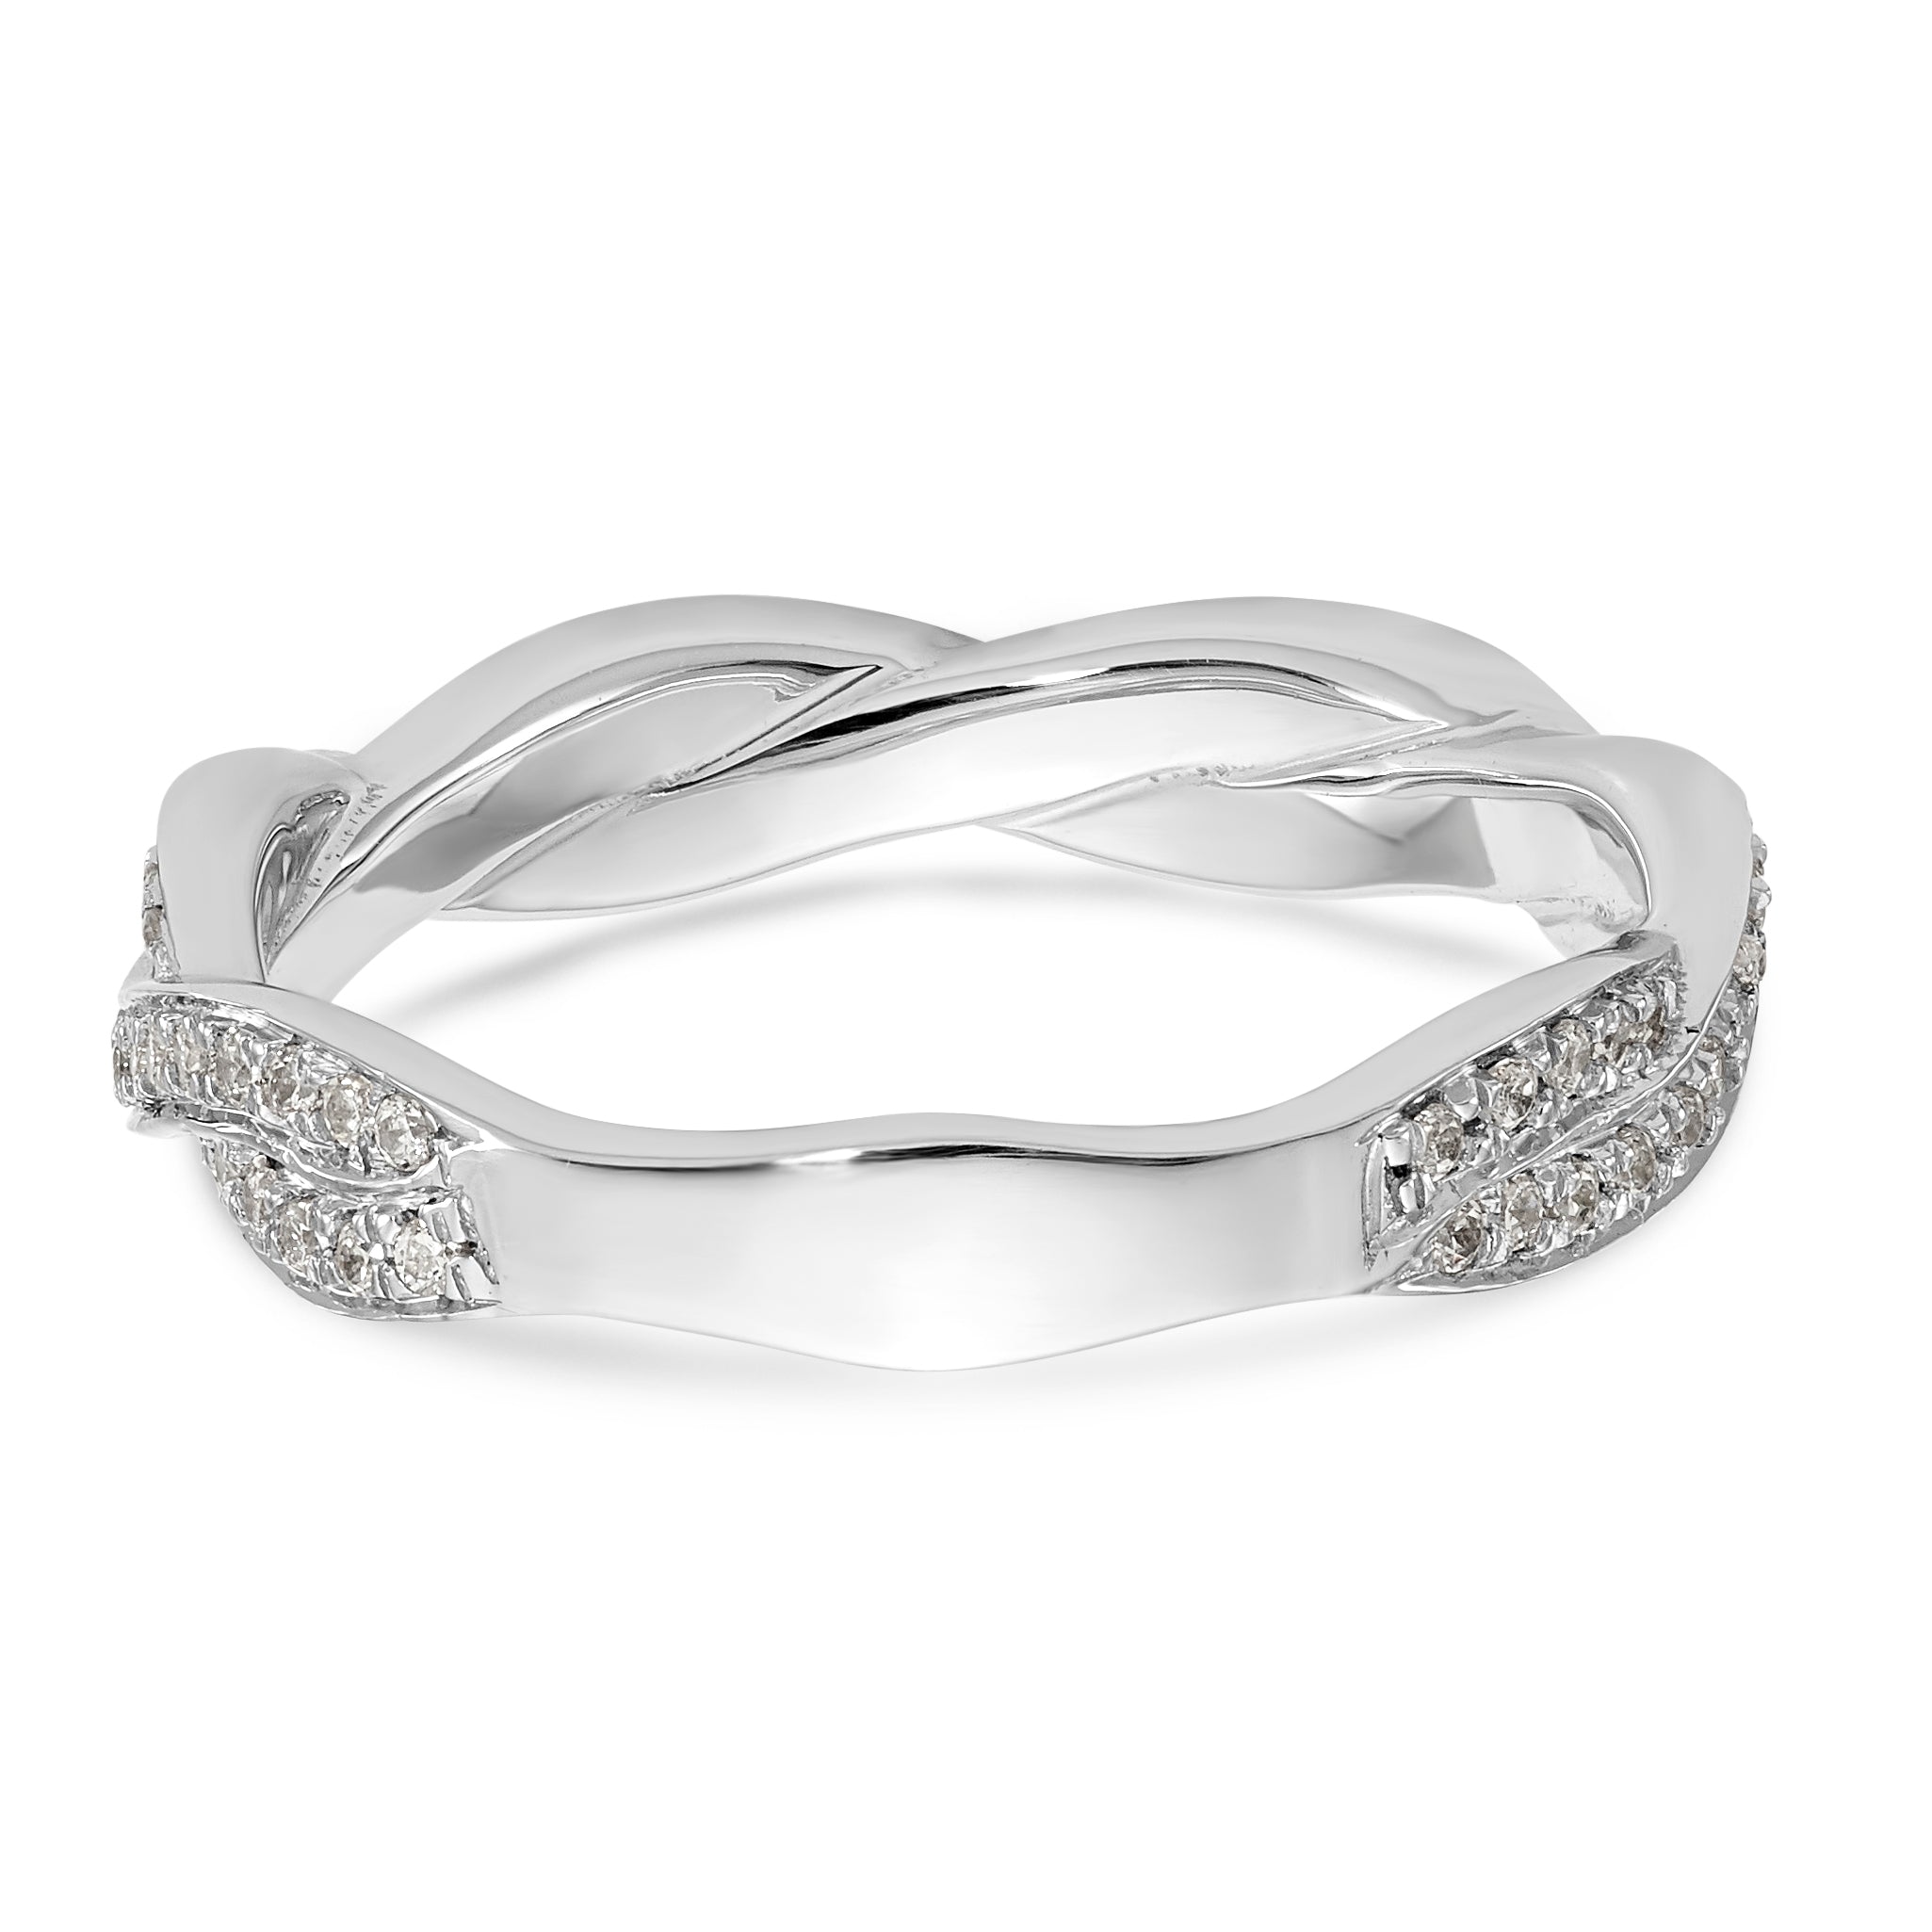 14K White Gold Criss-Cross 1/3 carat Diamond Complete Wedding Band